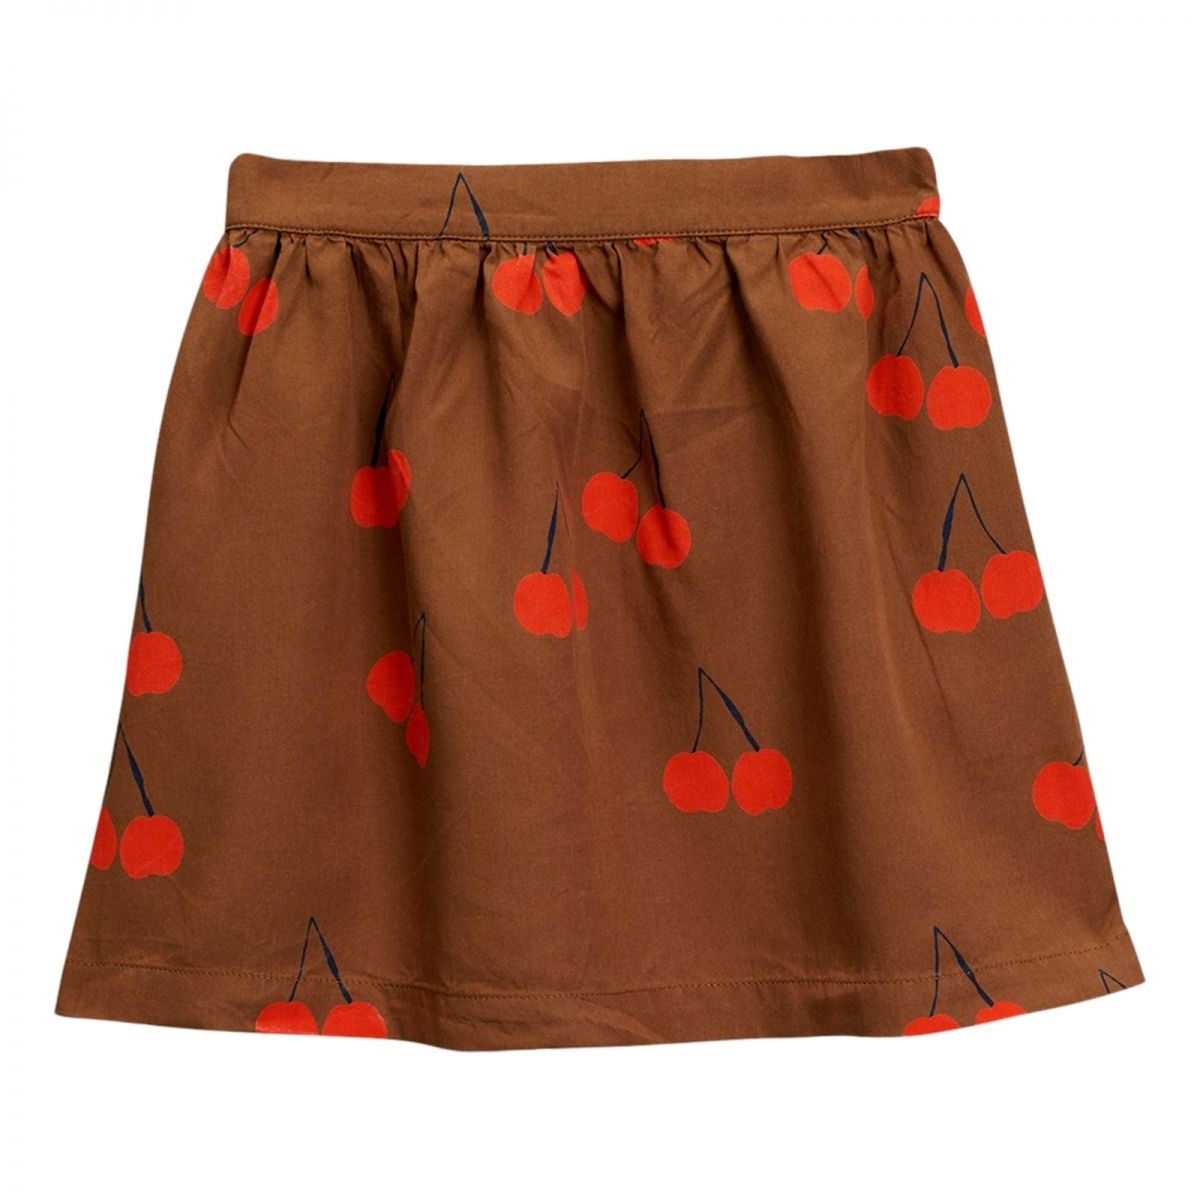 Mini Rodini - Cherry woven skirt brown - Faldas - 1973012016 